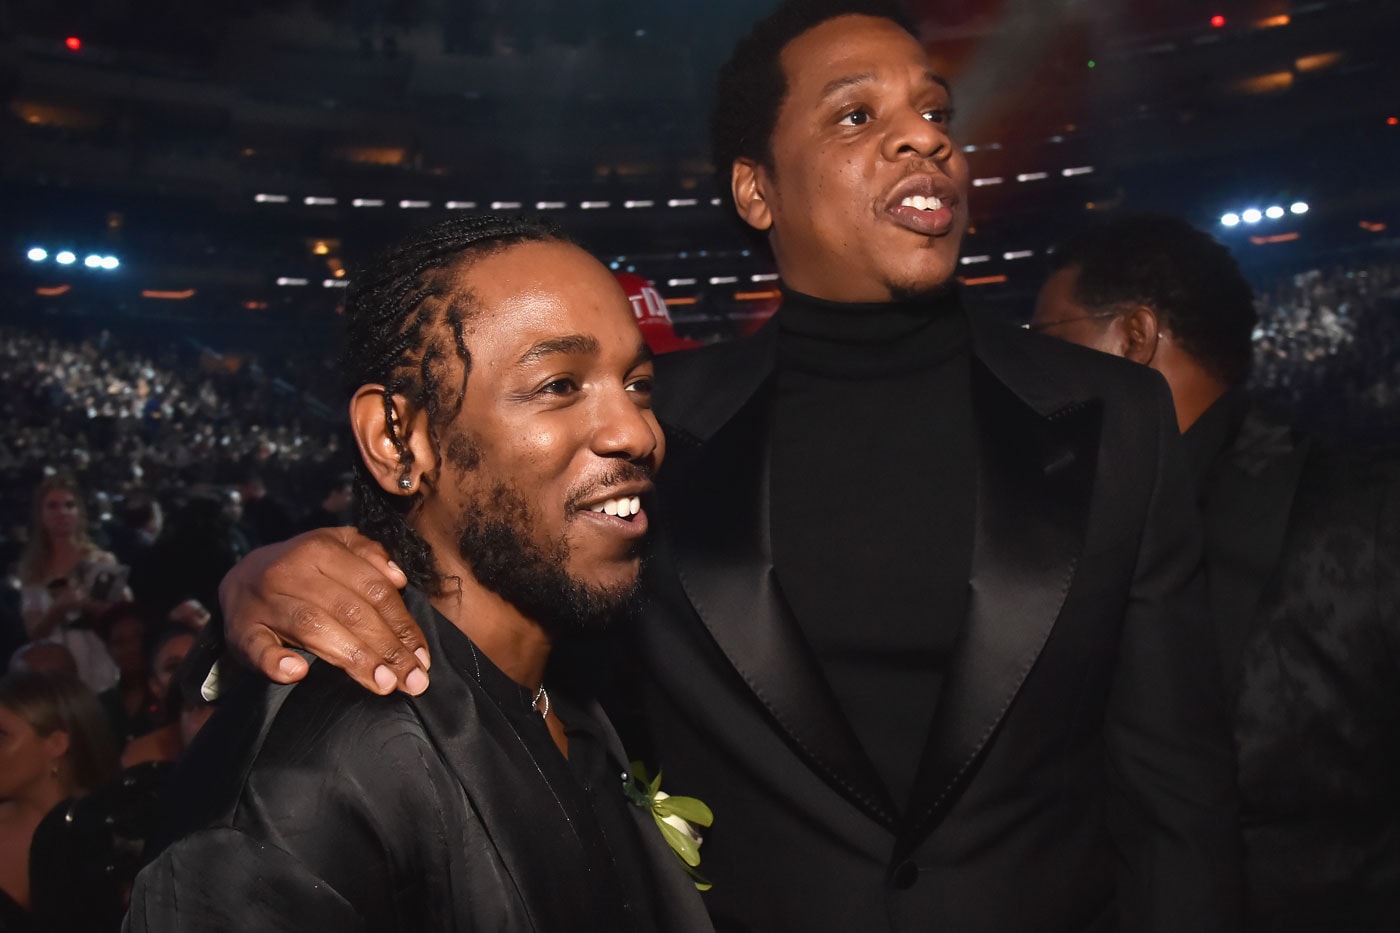 JayZ Kendrick Lamar Chidlish Gambino 2018 Grammy Awards Ceremony Video Acceptance